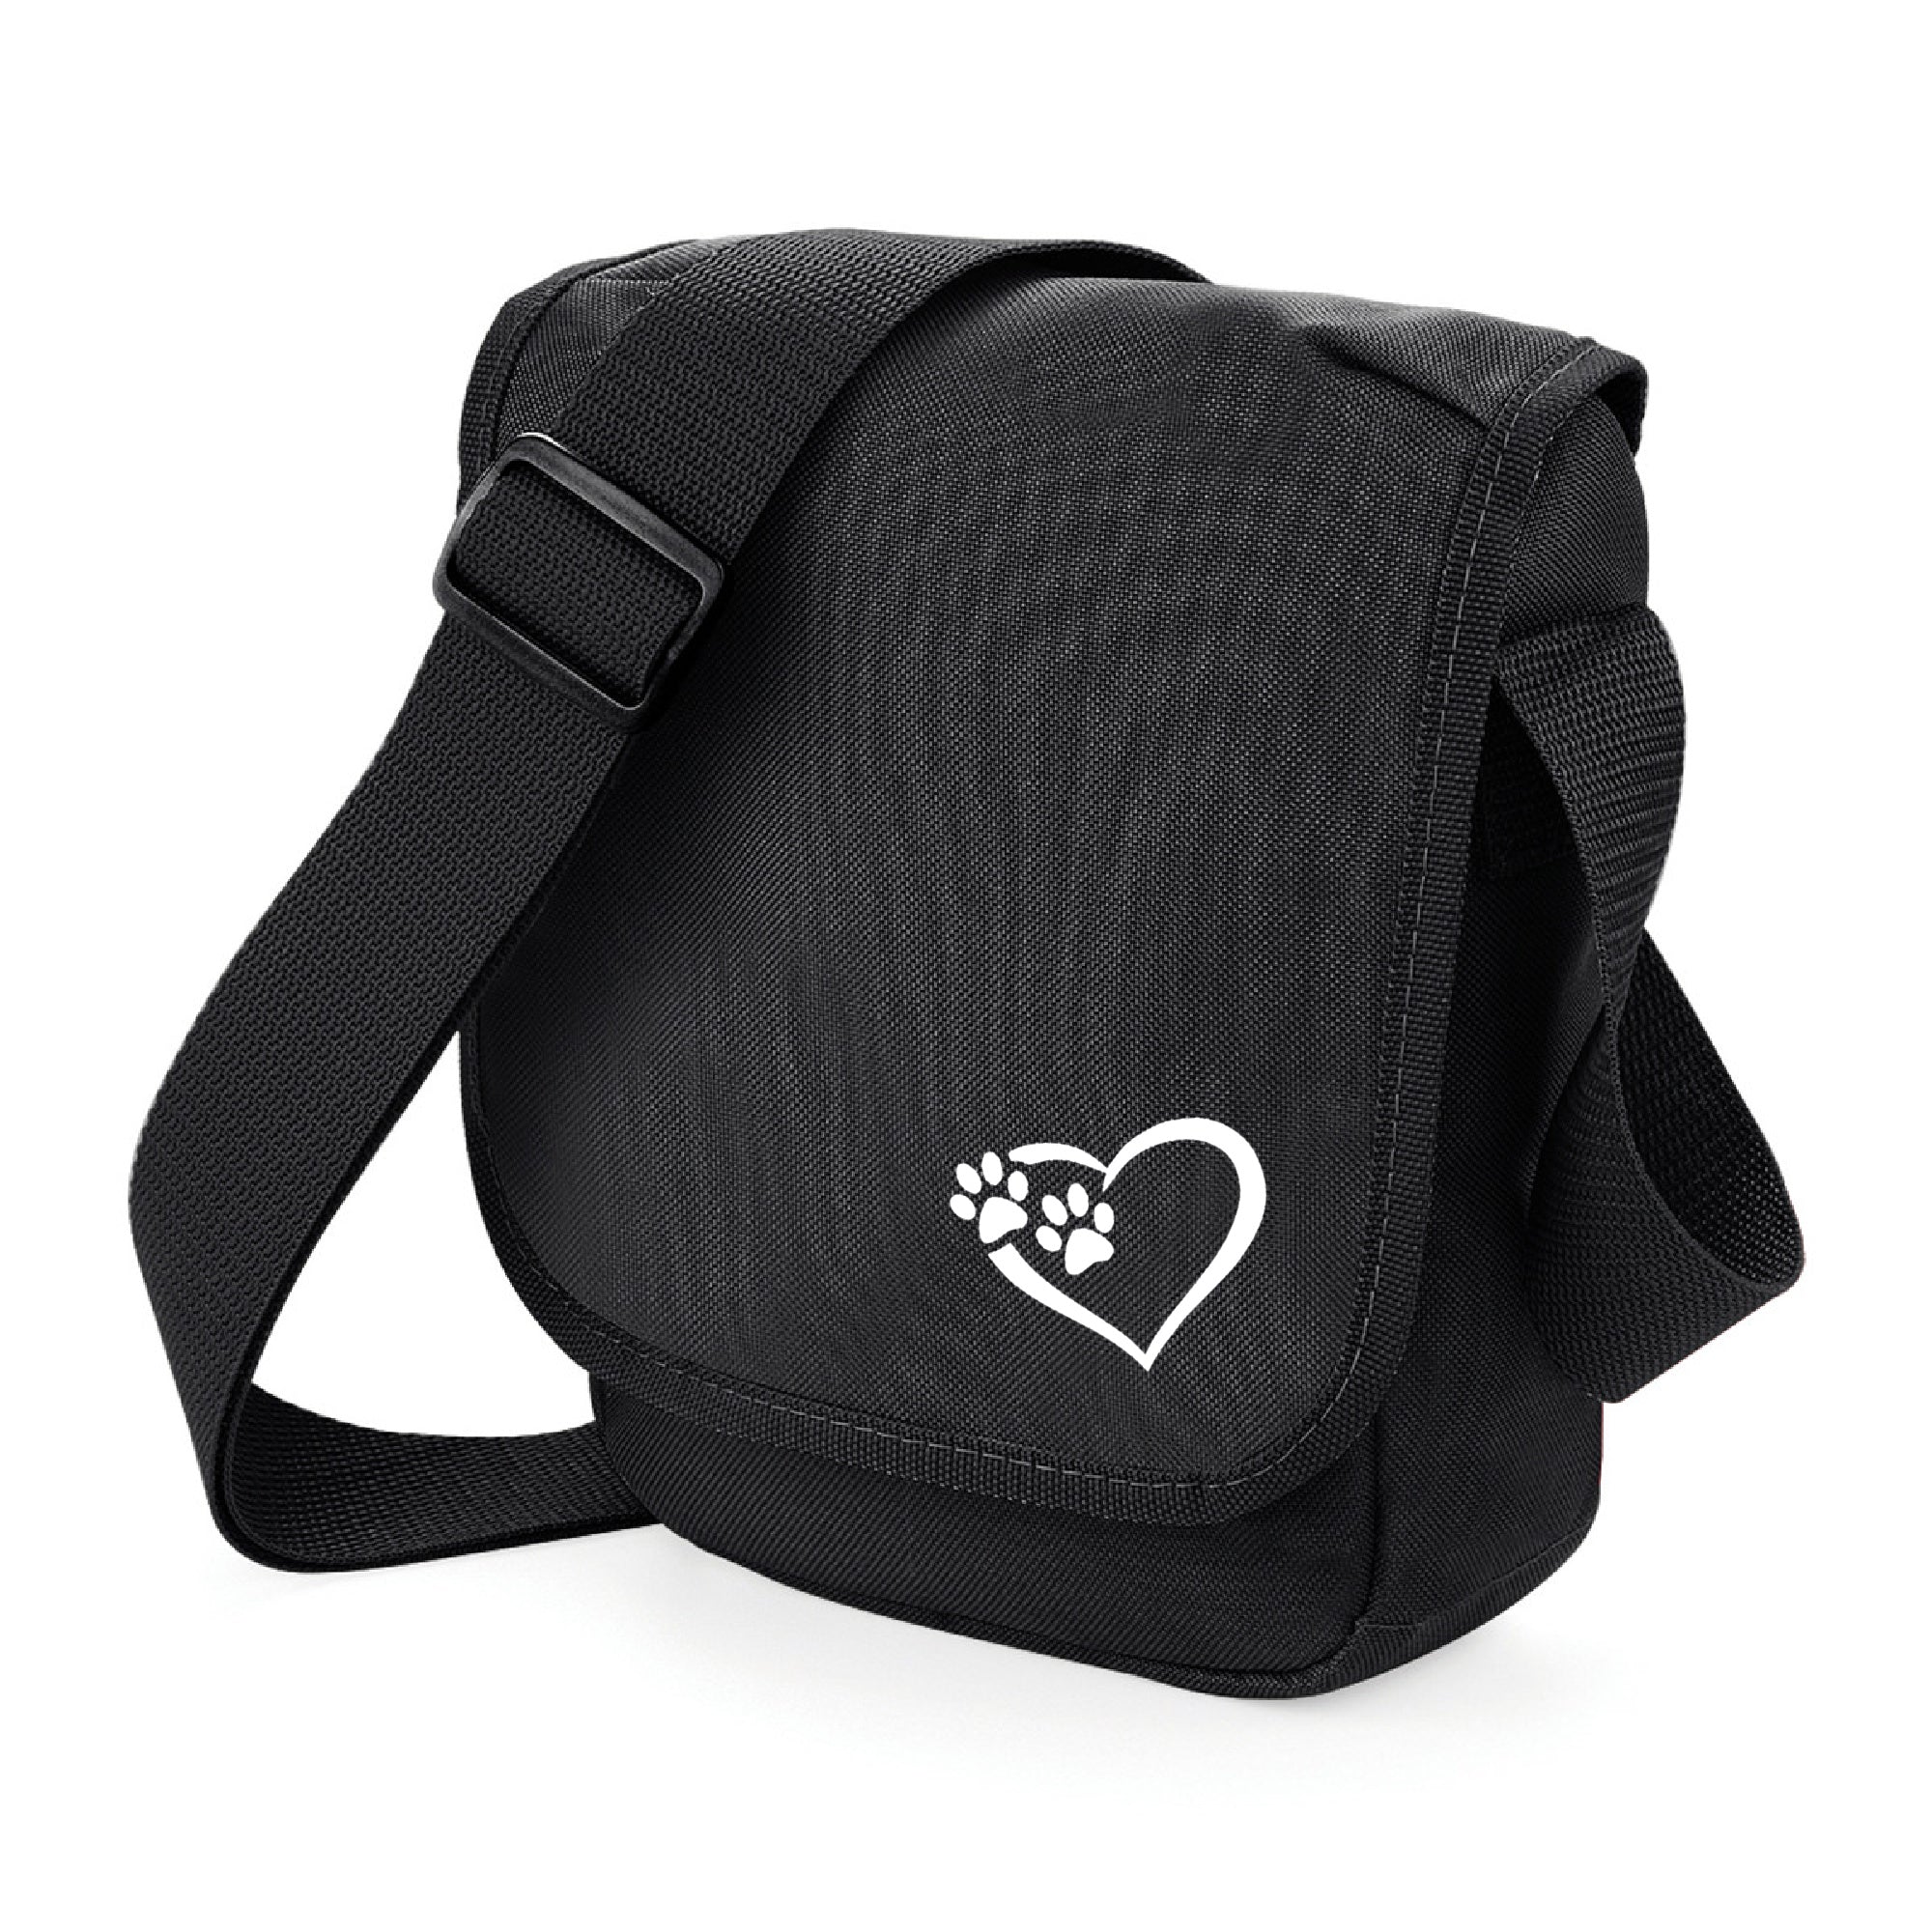 Dog Walking Bag - Cross Body Messenger Bag - Black with White Heart and Paws Logo